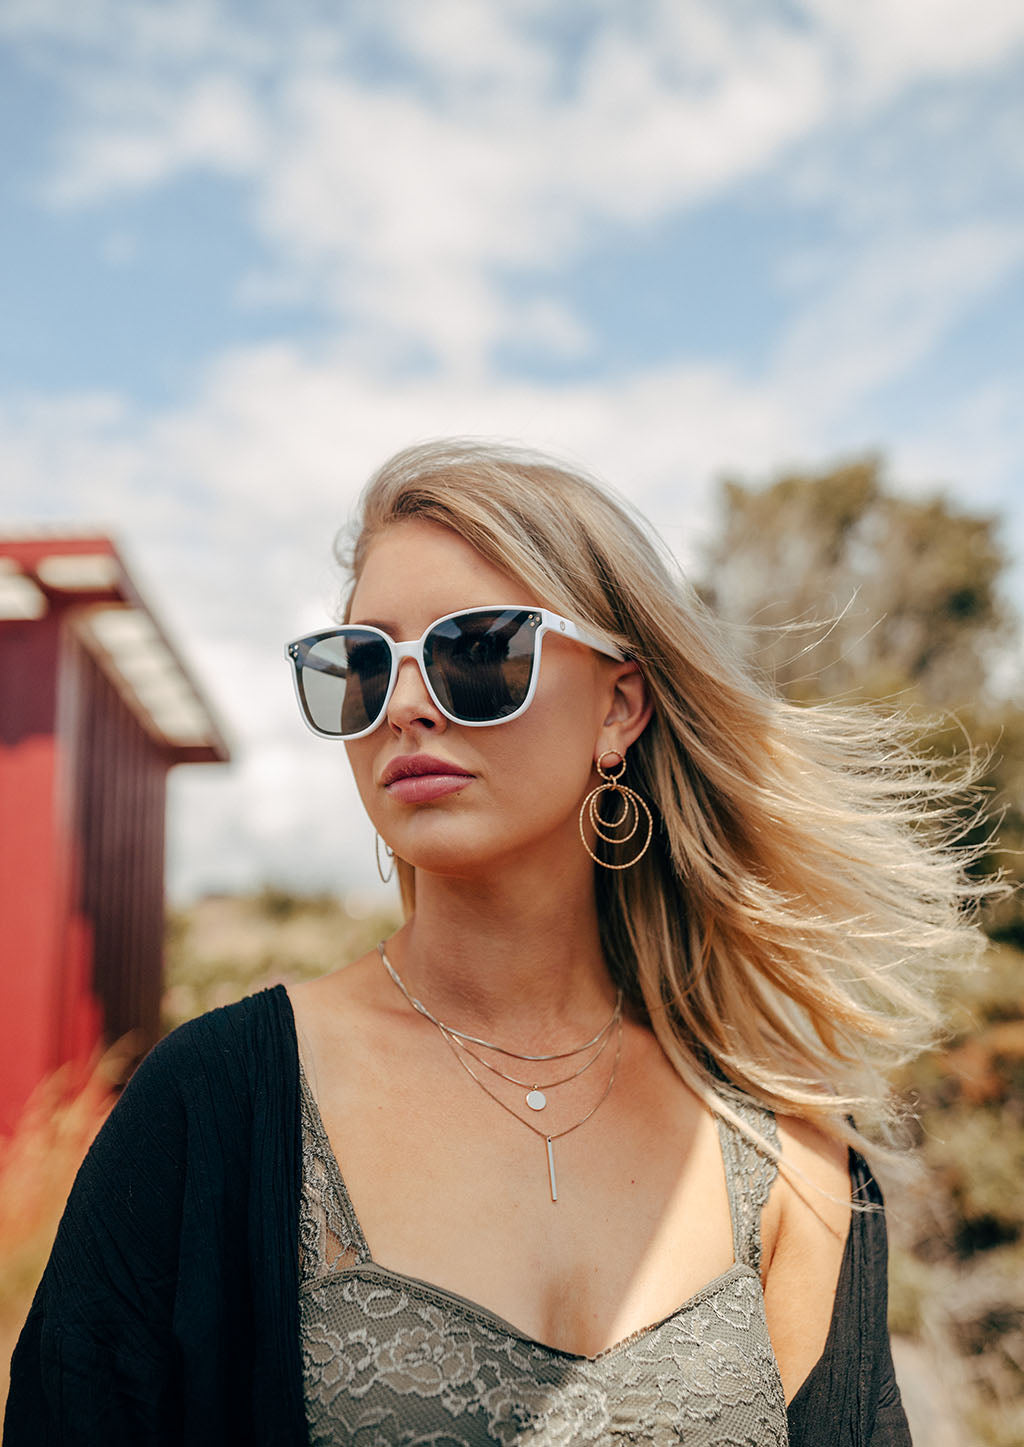 Lotus Wayfarer sunglasses - On blonde female model